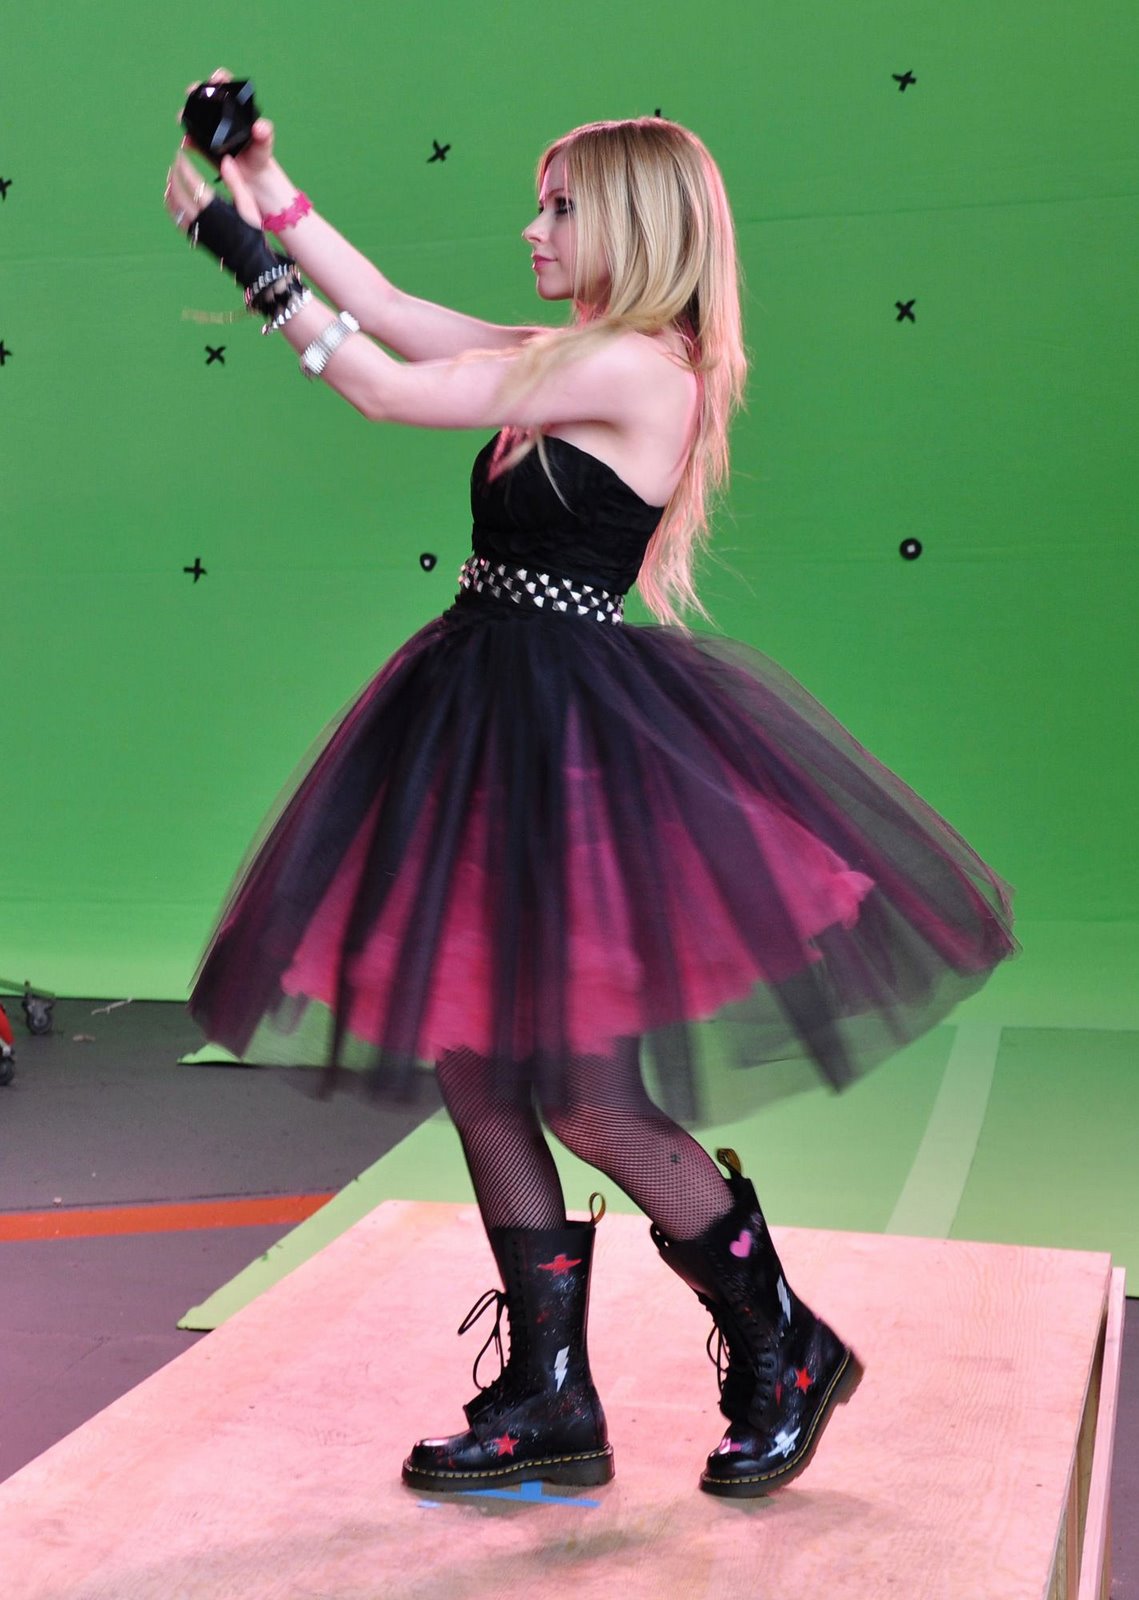 Los Mejores Vestidos De Avril Lavigne - Taringa!